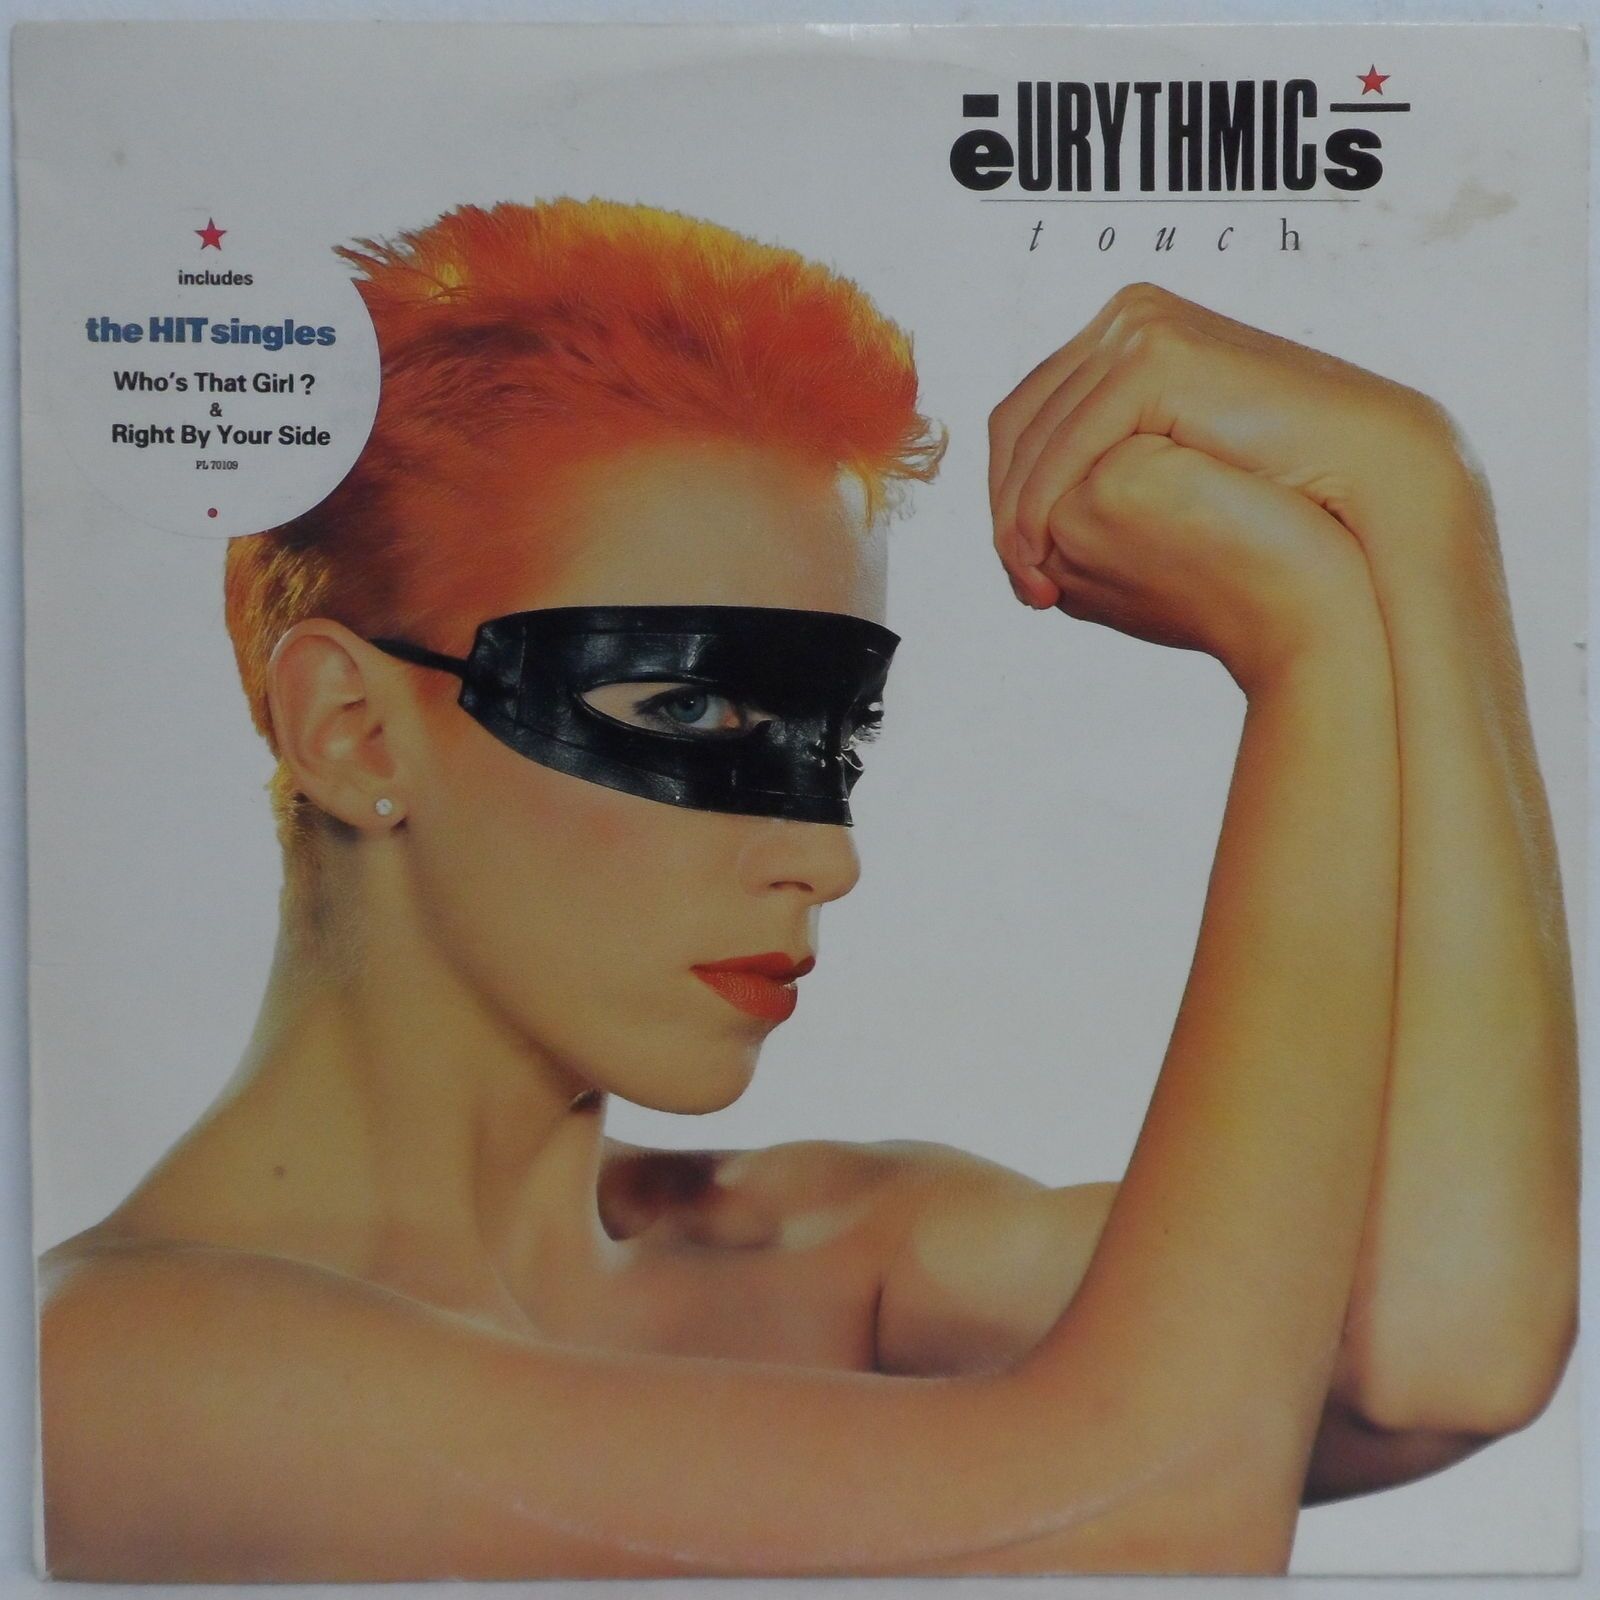 Eurythmics – Touch LP 12″ Vinyl Record Orig. 1983 Israel pressing Annie Lenox